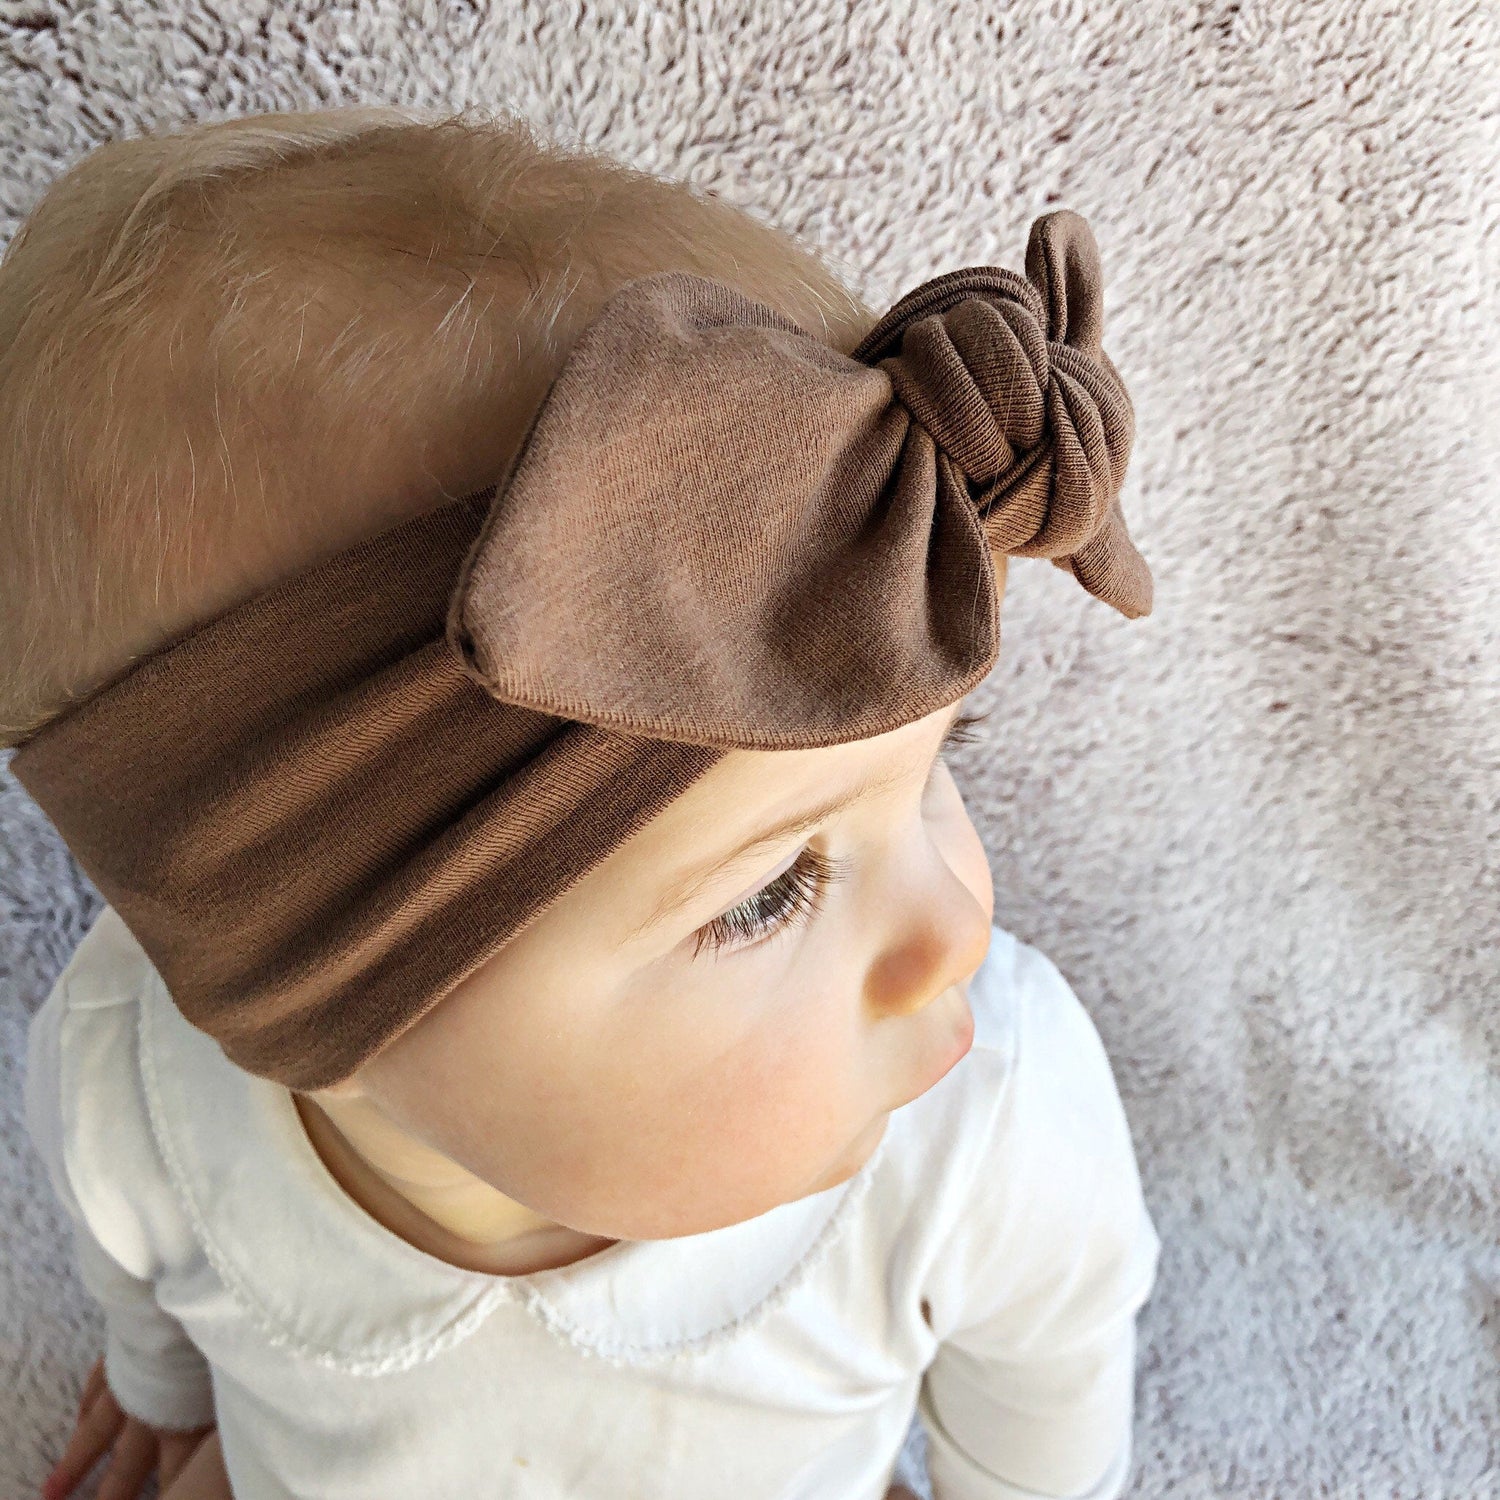 Baby Girl in Mocha Top Knot Headband